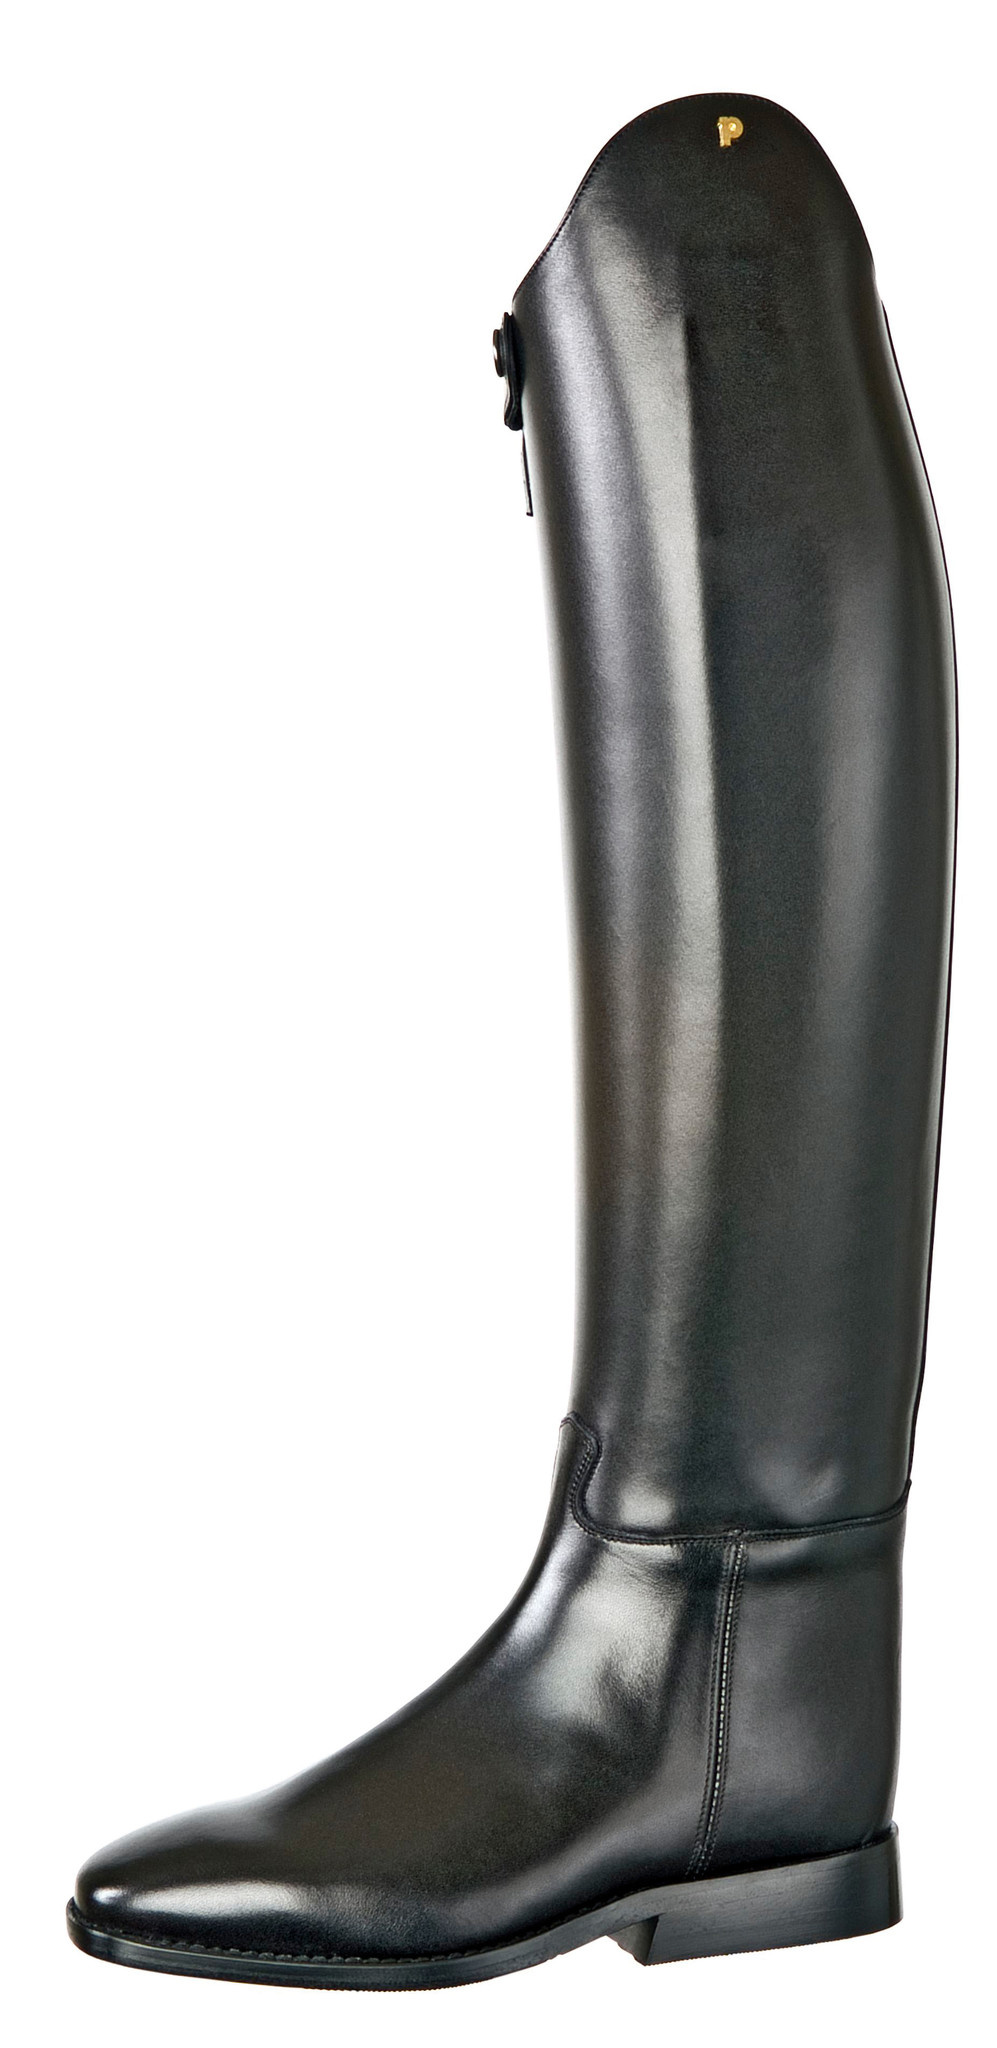 D379-5.0 Petrie Dressage black UK size 5.0 49-37 Series 7 XXLW - Van Huet Riding